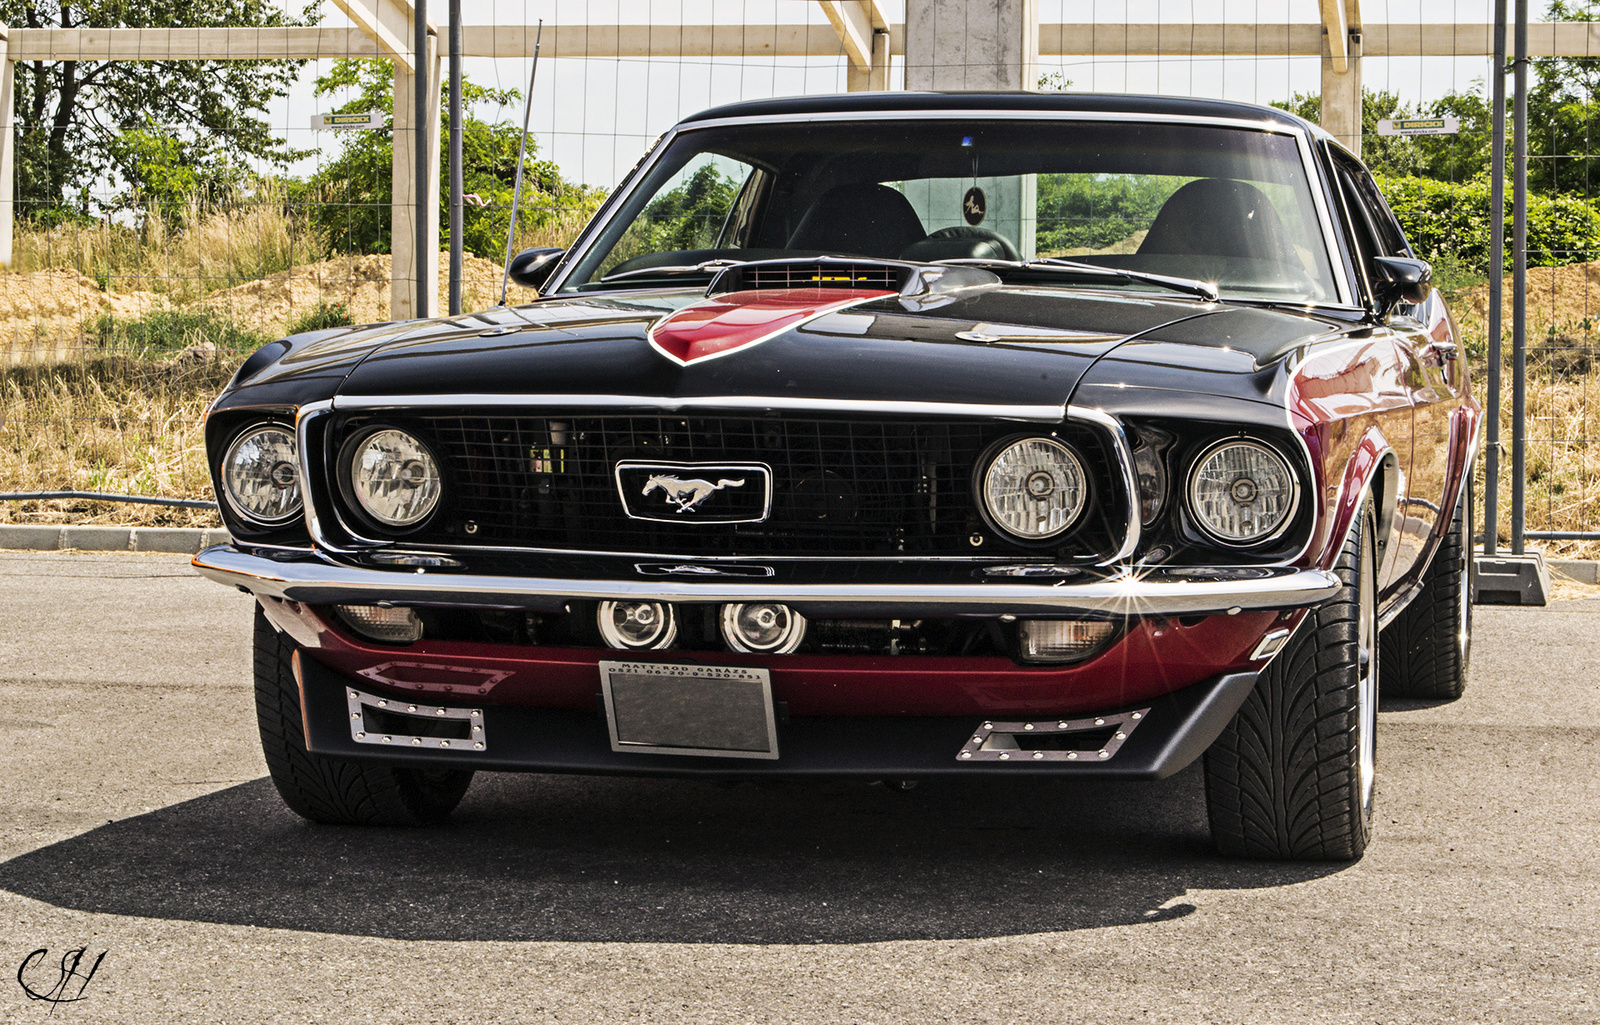 69' Mustang